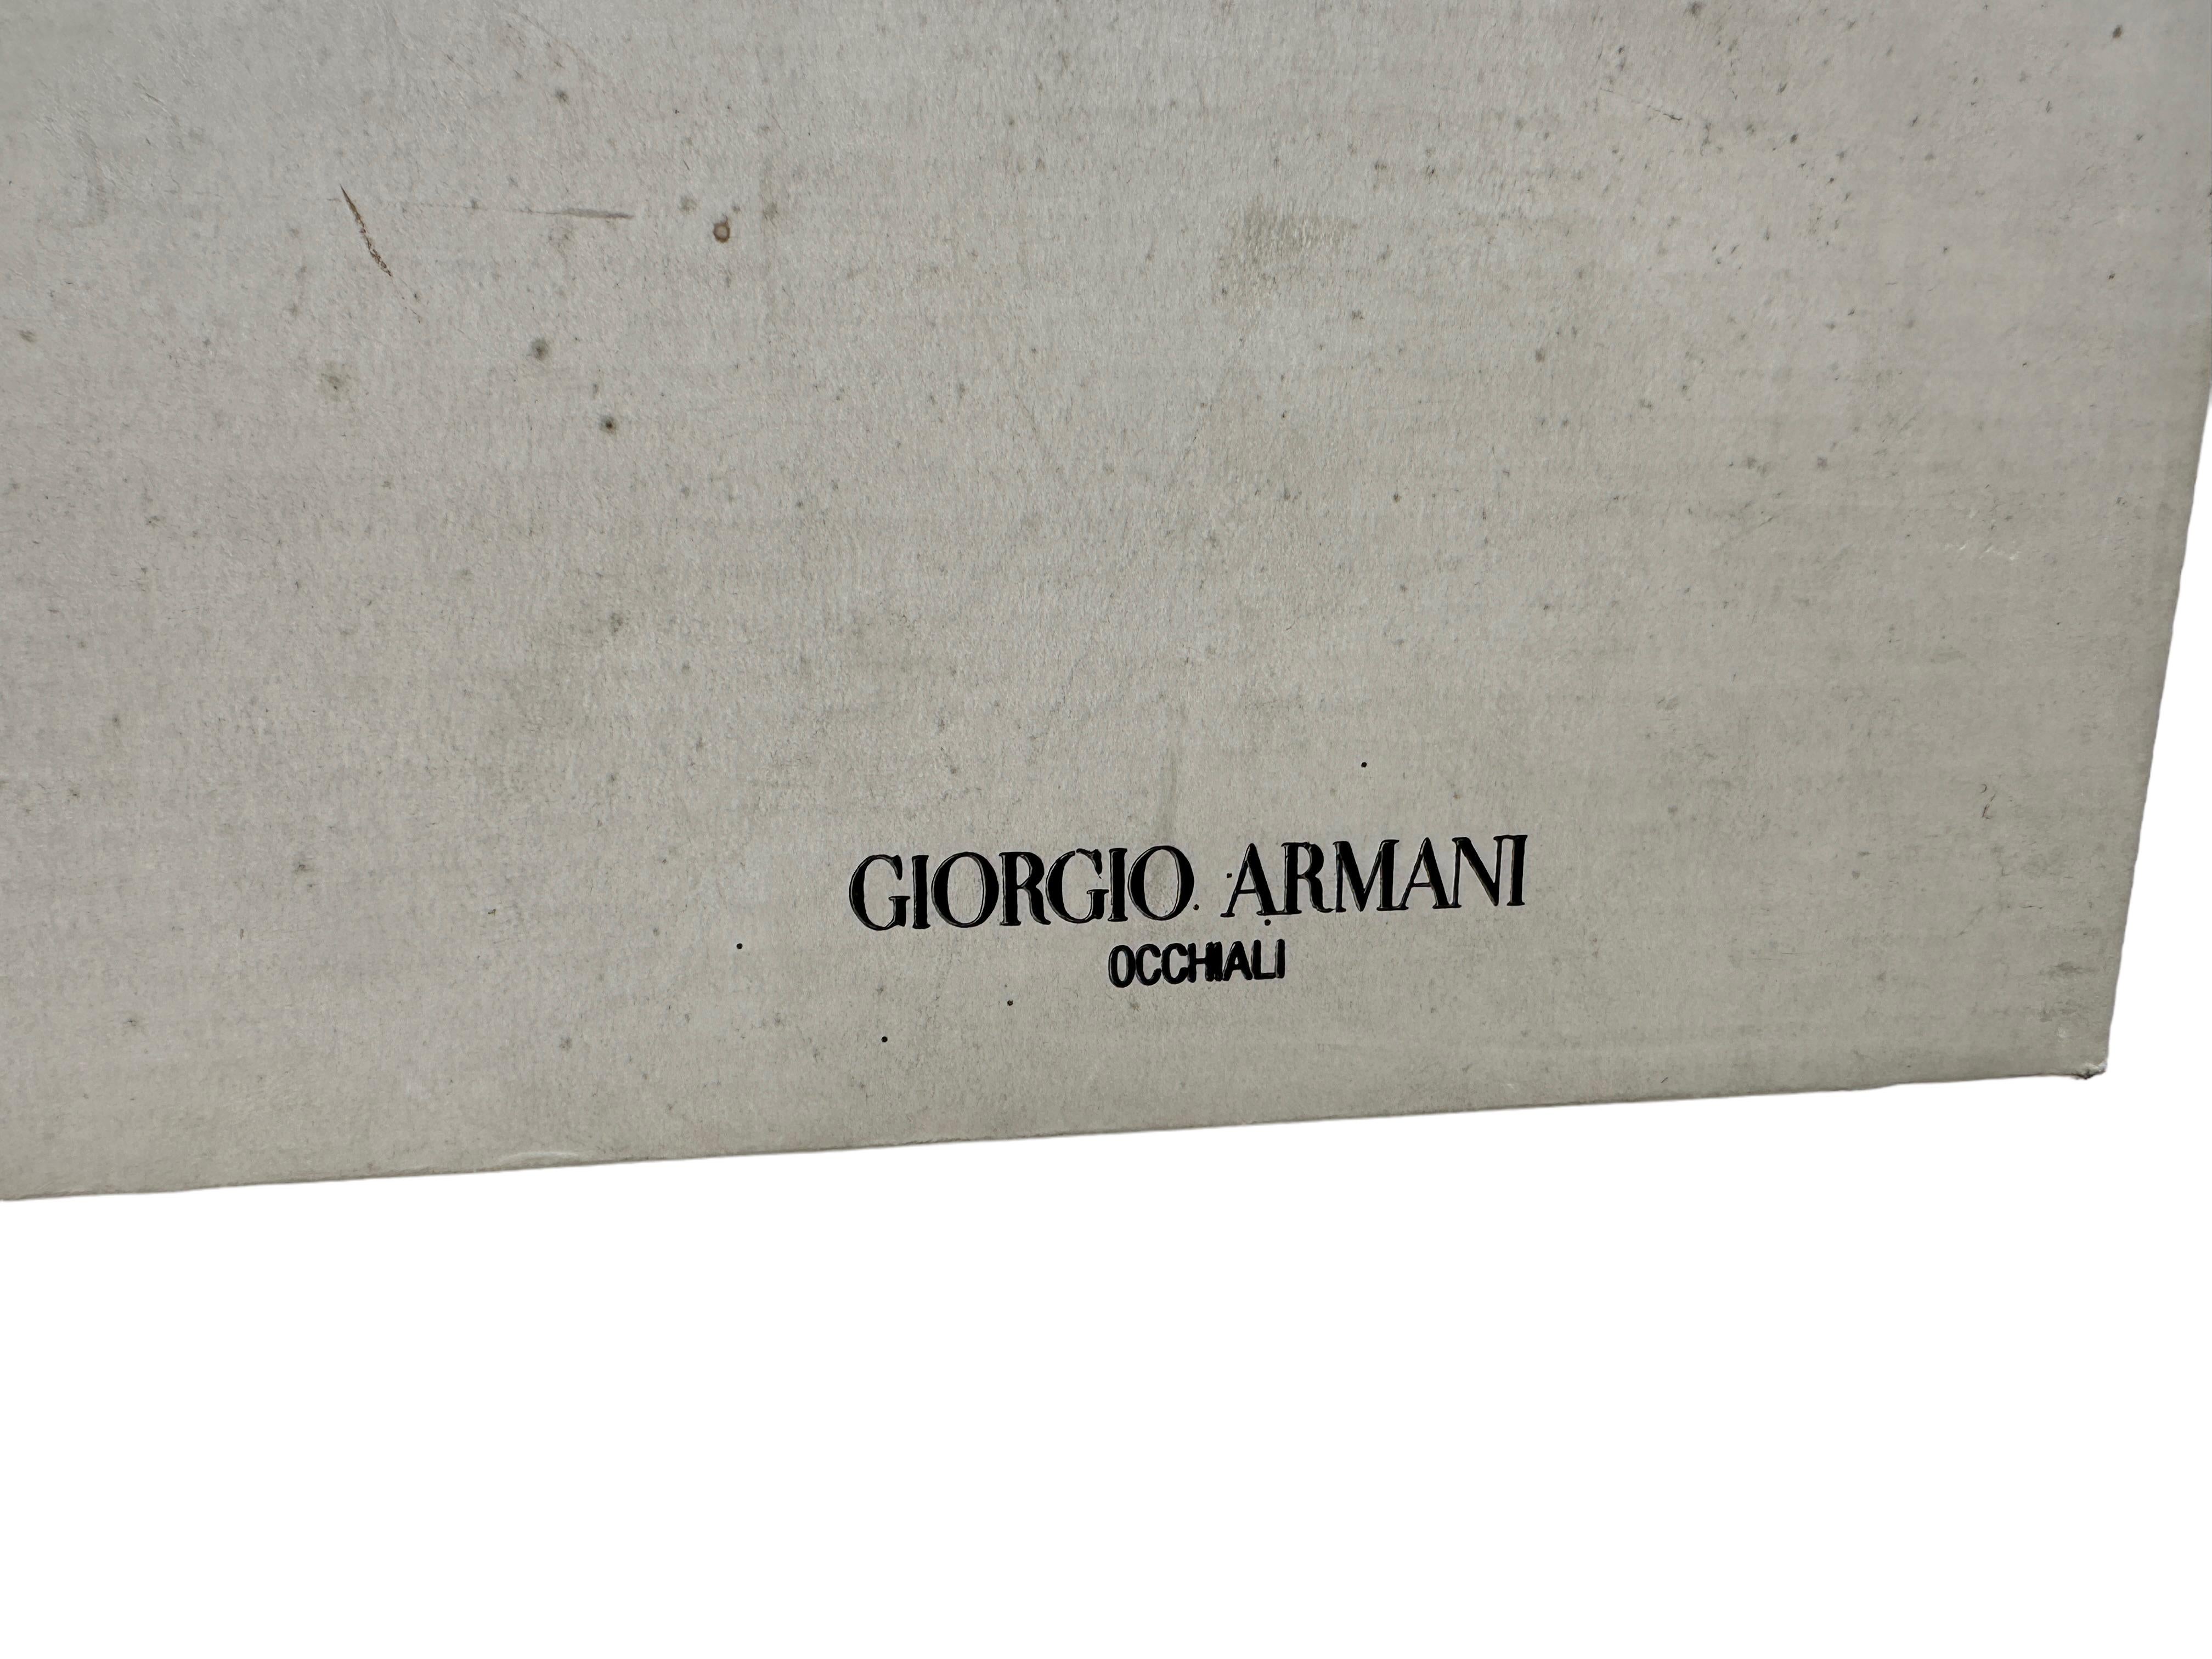 Large Mid-Century Italian Giorgio Armani Eye Glasses Factice Shop Display Piece For Sale 4